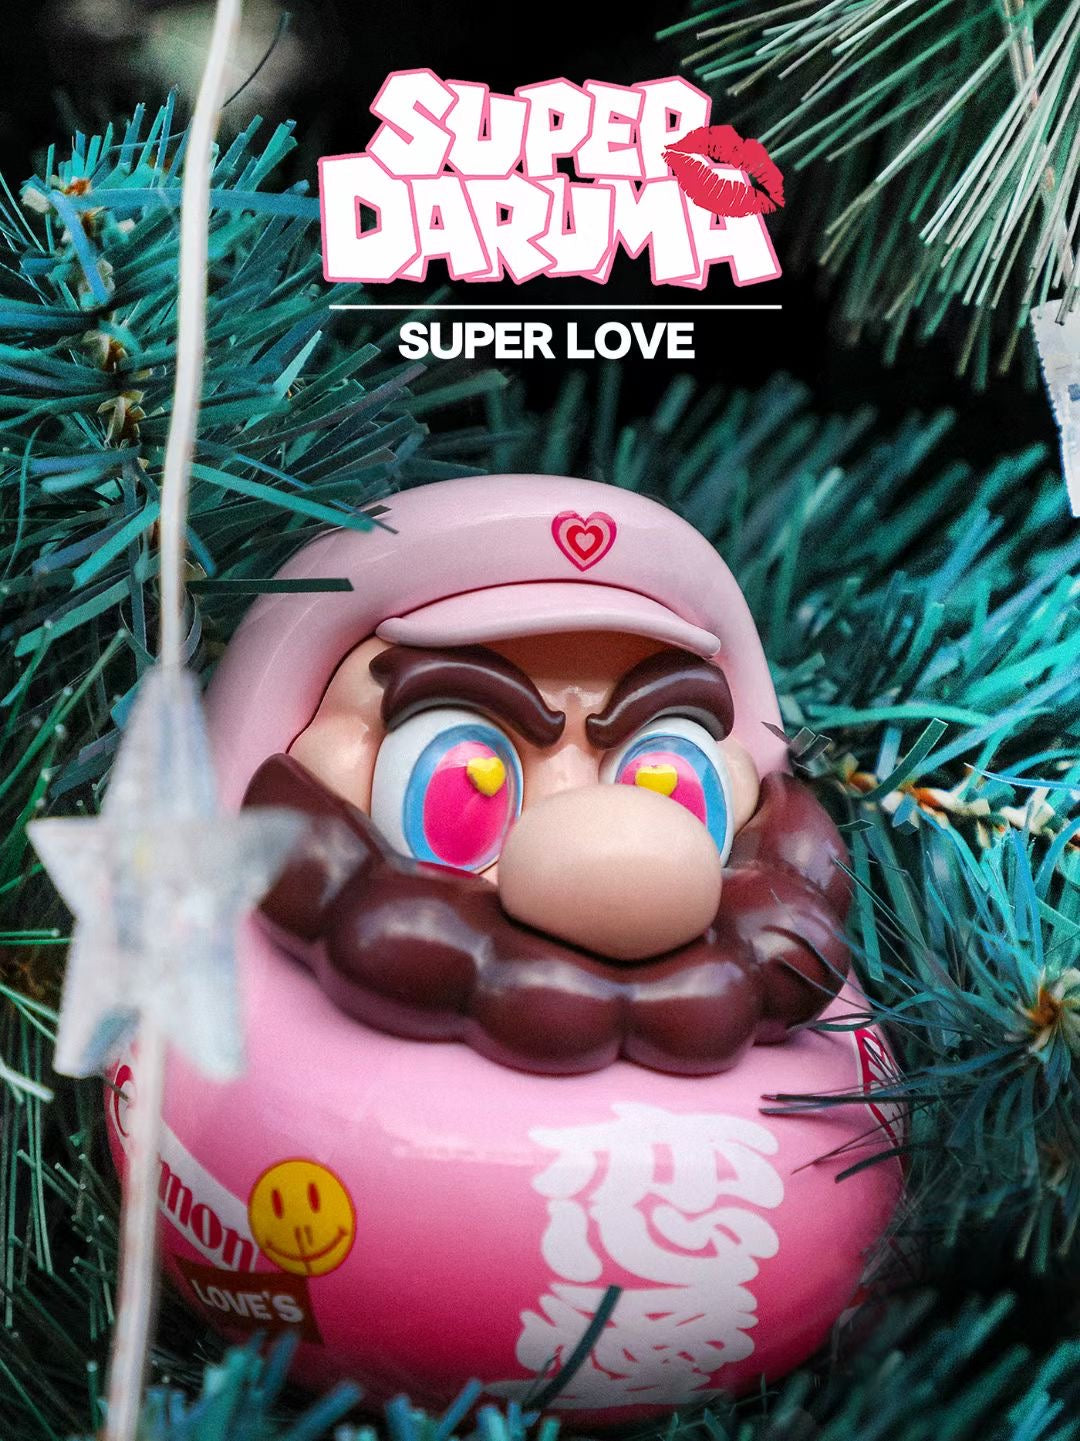 Senzil x Superdaruma - SuperDaruma "Love" | 超‮达级‬摩“恋爱”